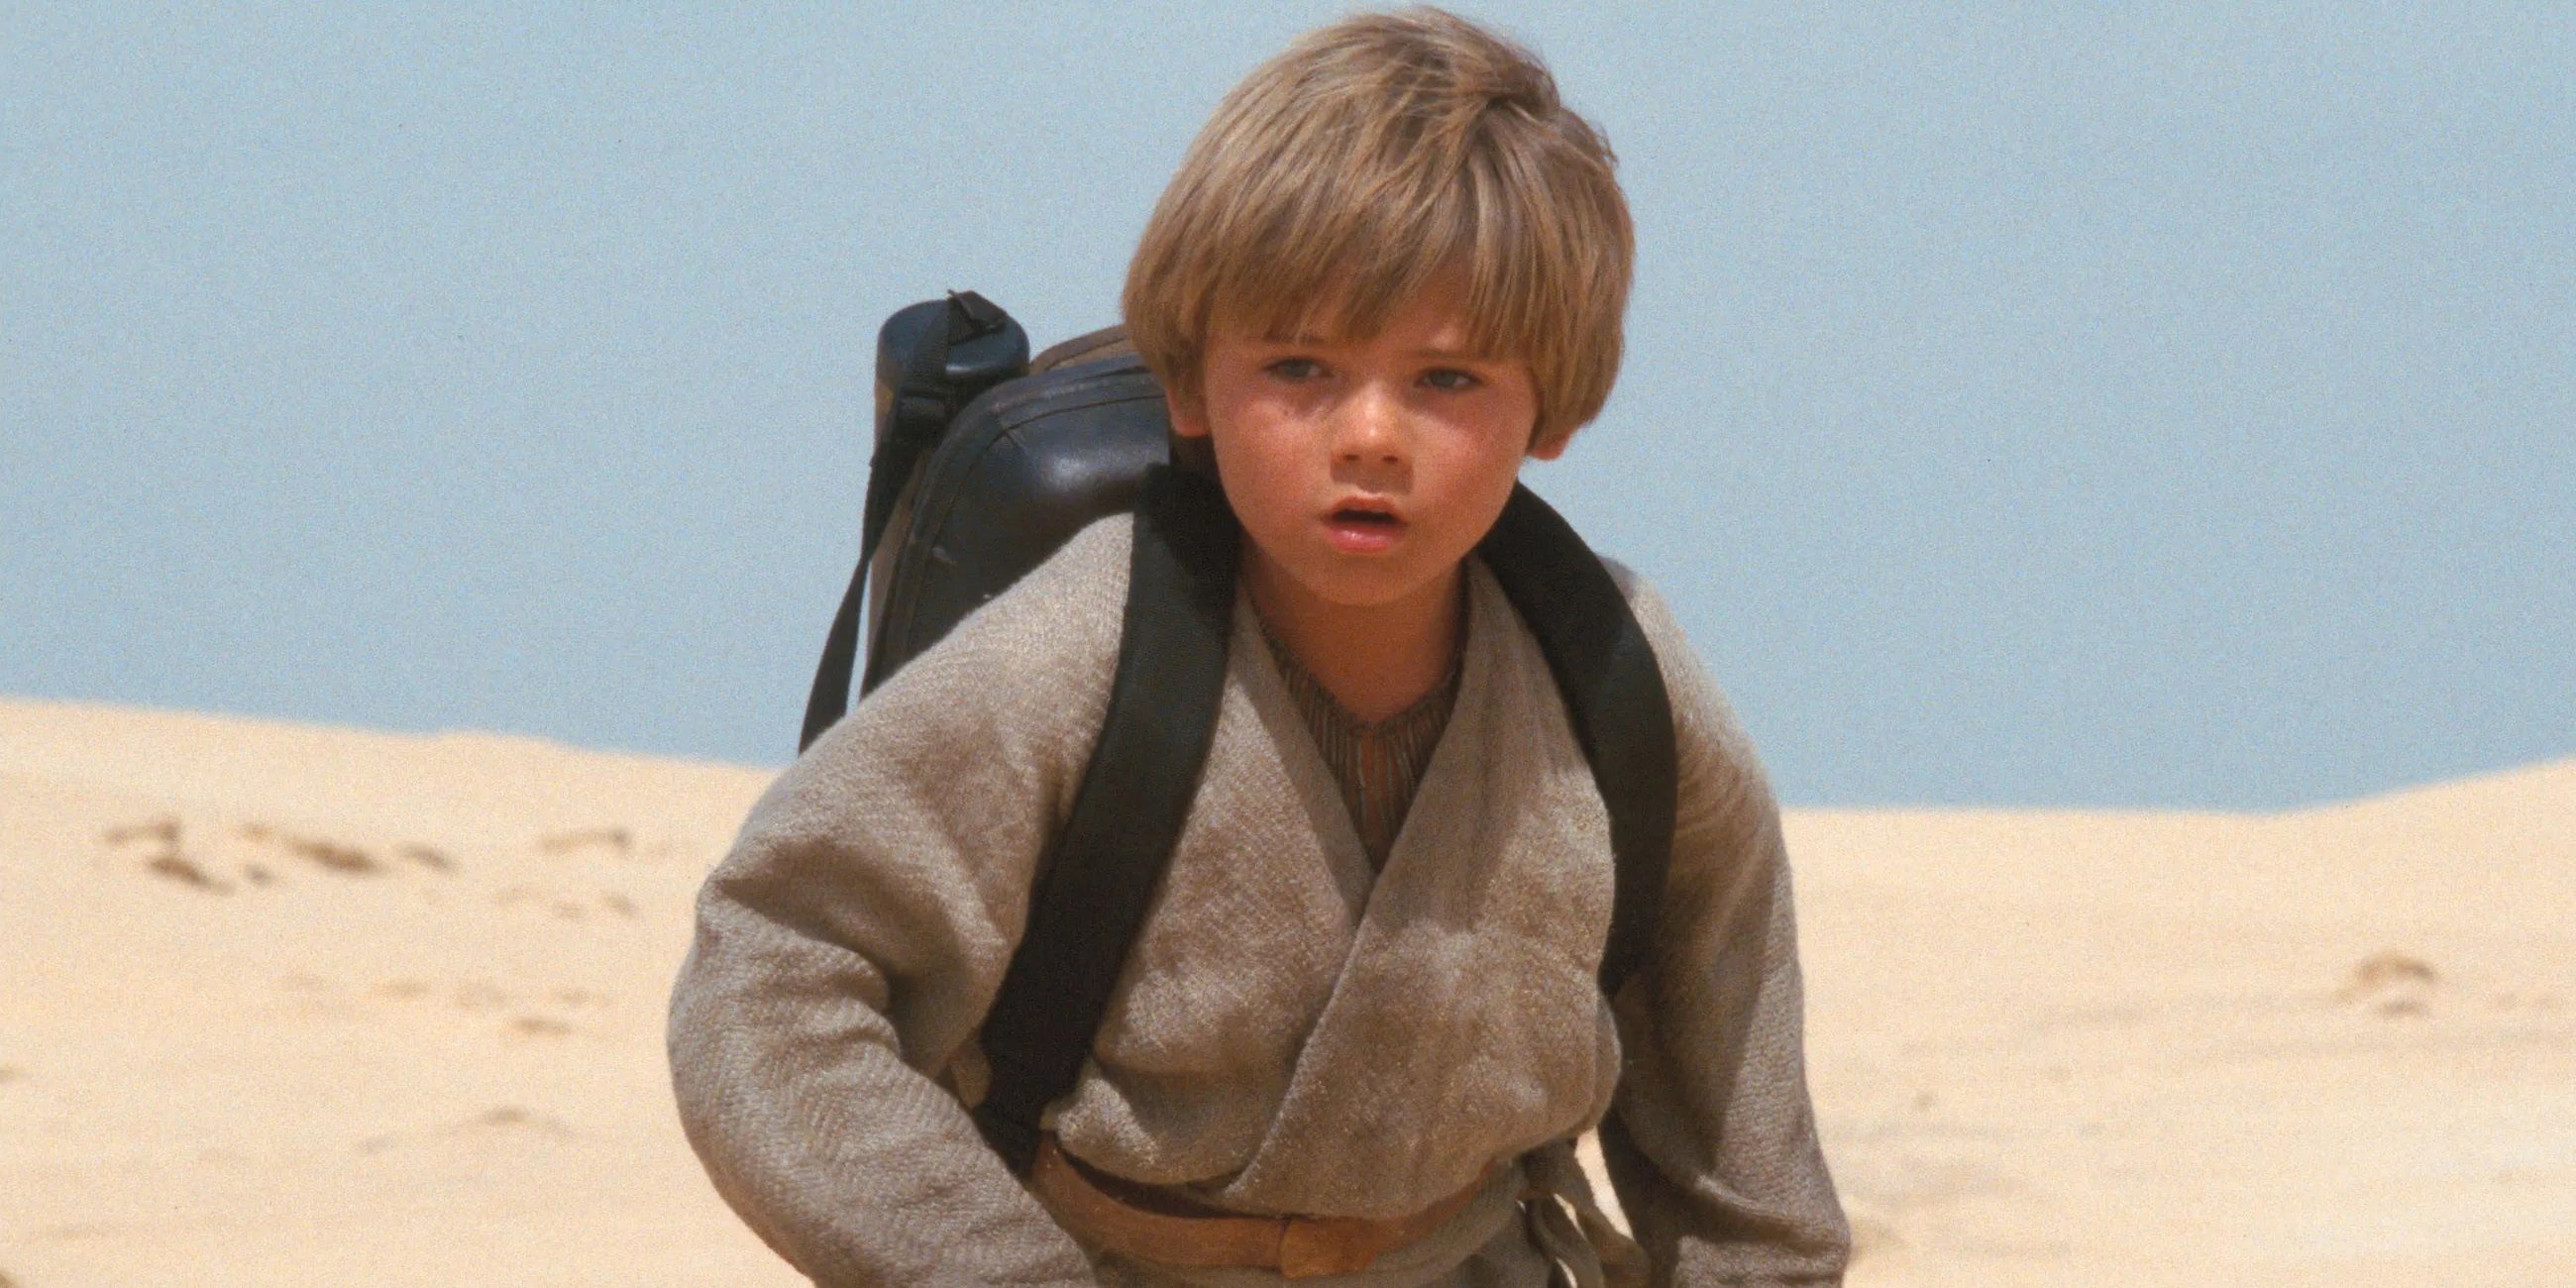 Jake Lloyd as Anakin in the Tatooine desert in The Phantom Menace